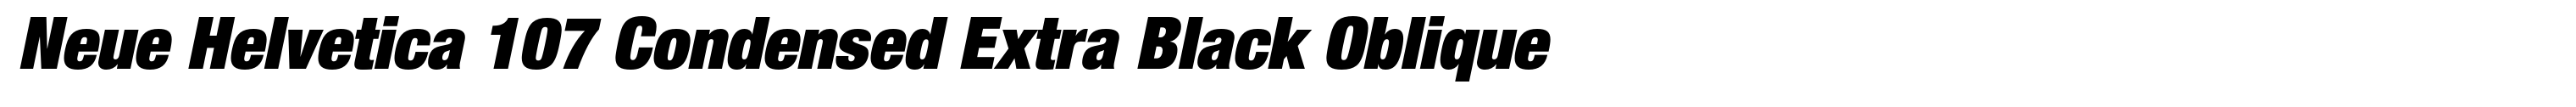 Neue Helvetica 107 Condensed Extra Black Oblique